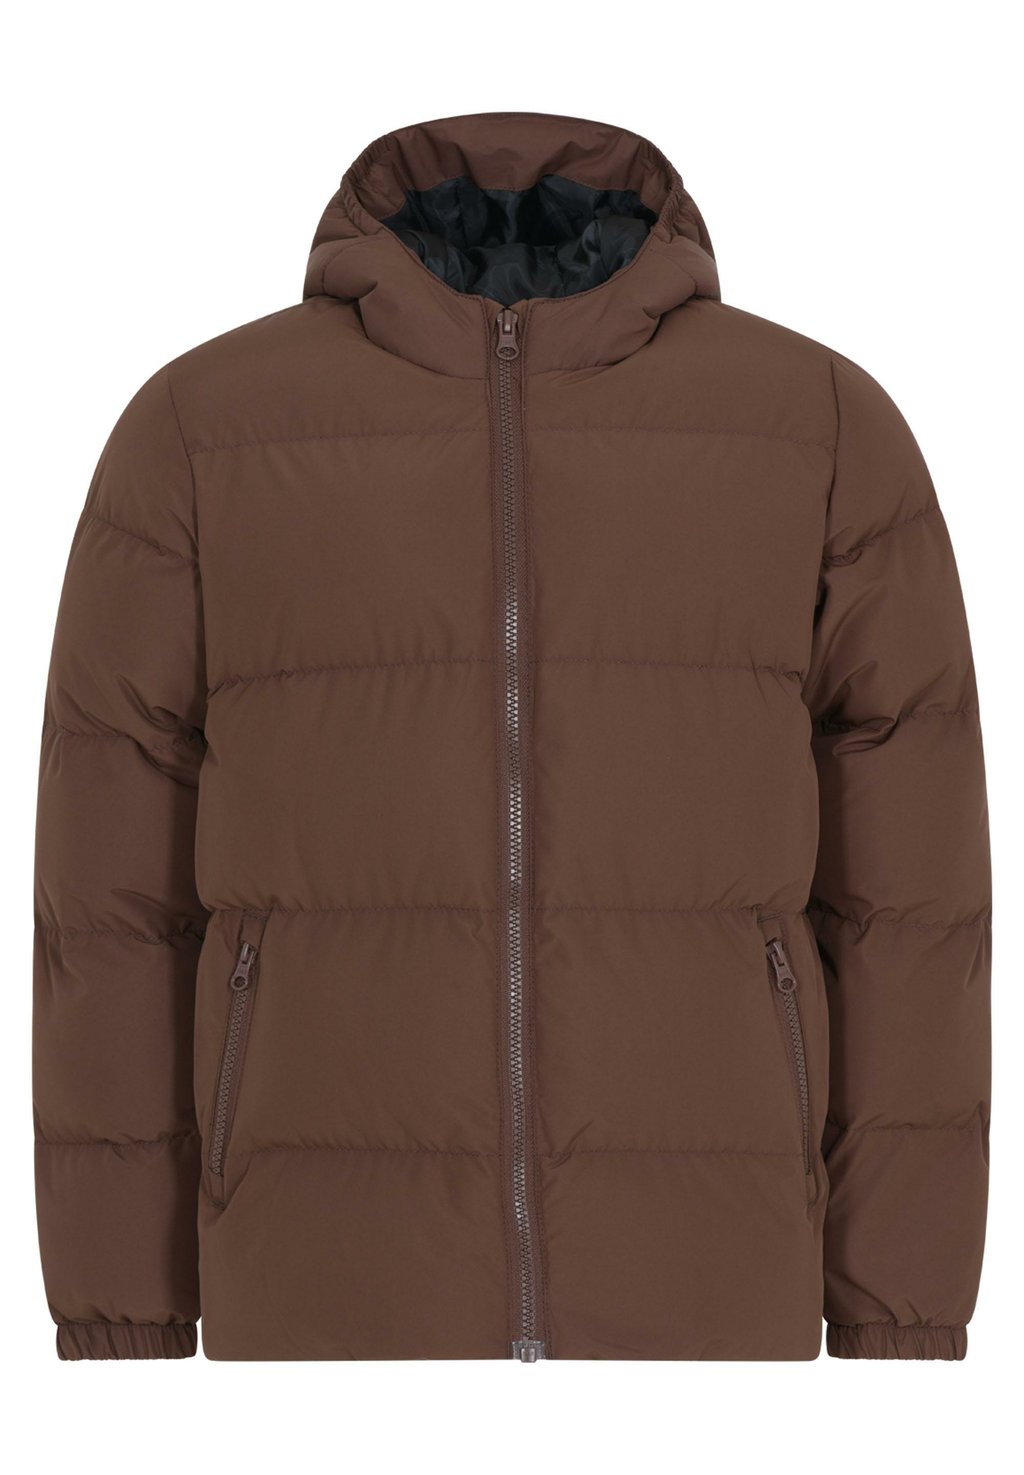 Зимняя куртка Kabooki, коричневая